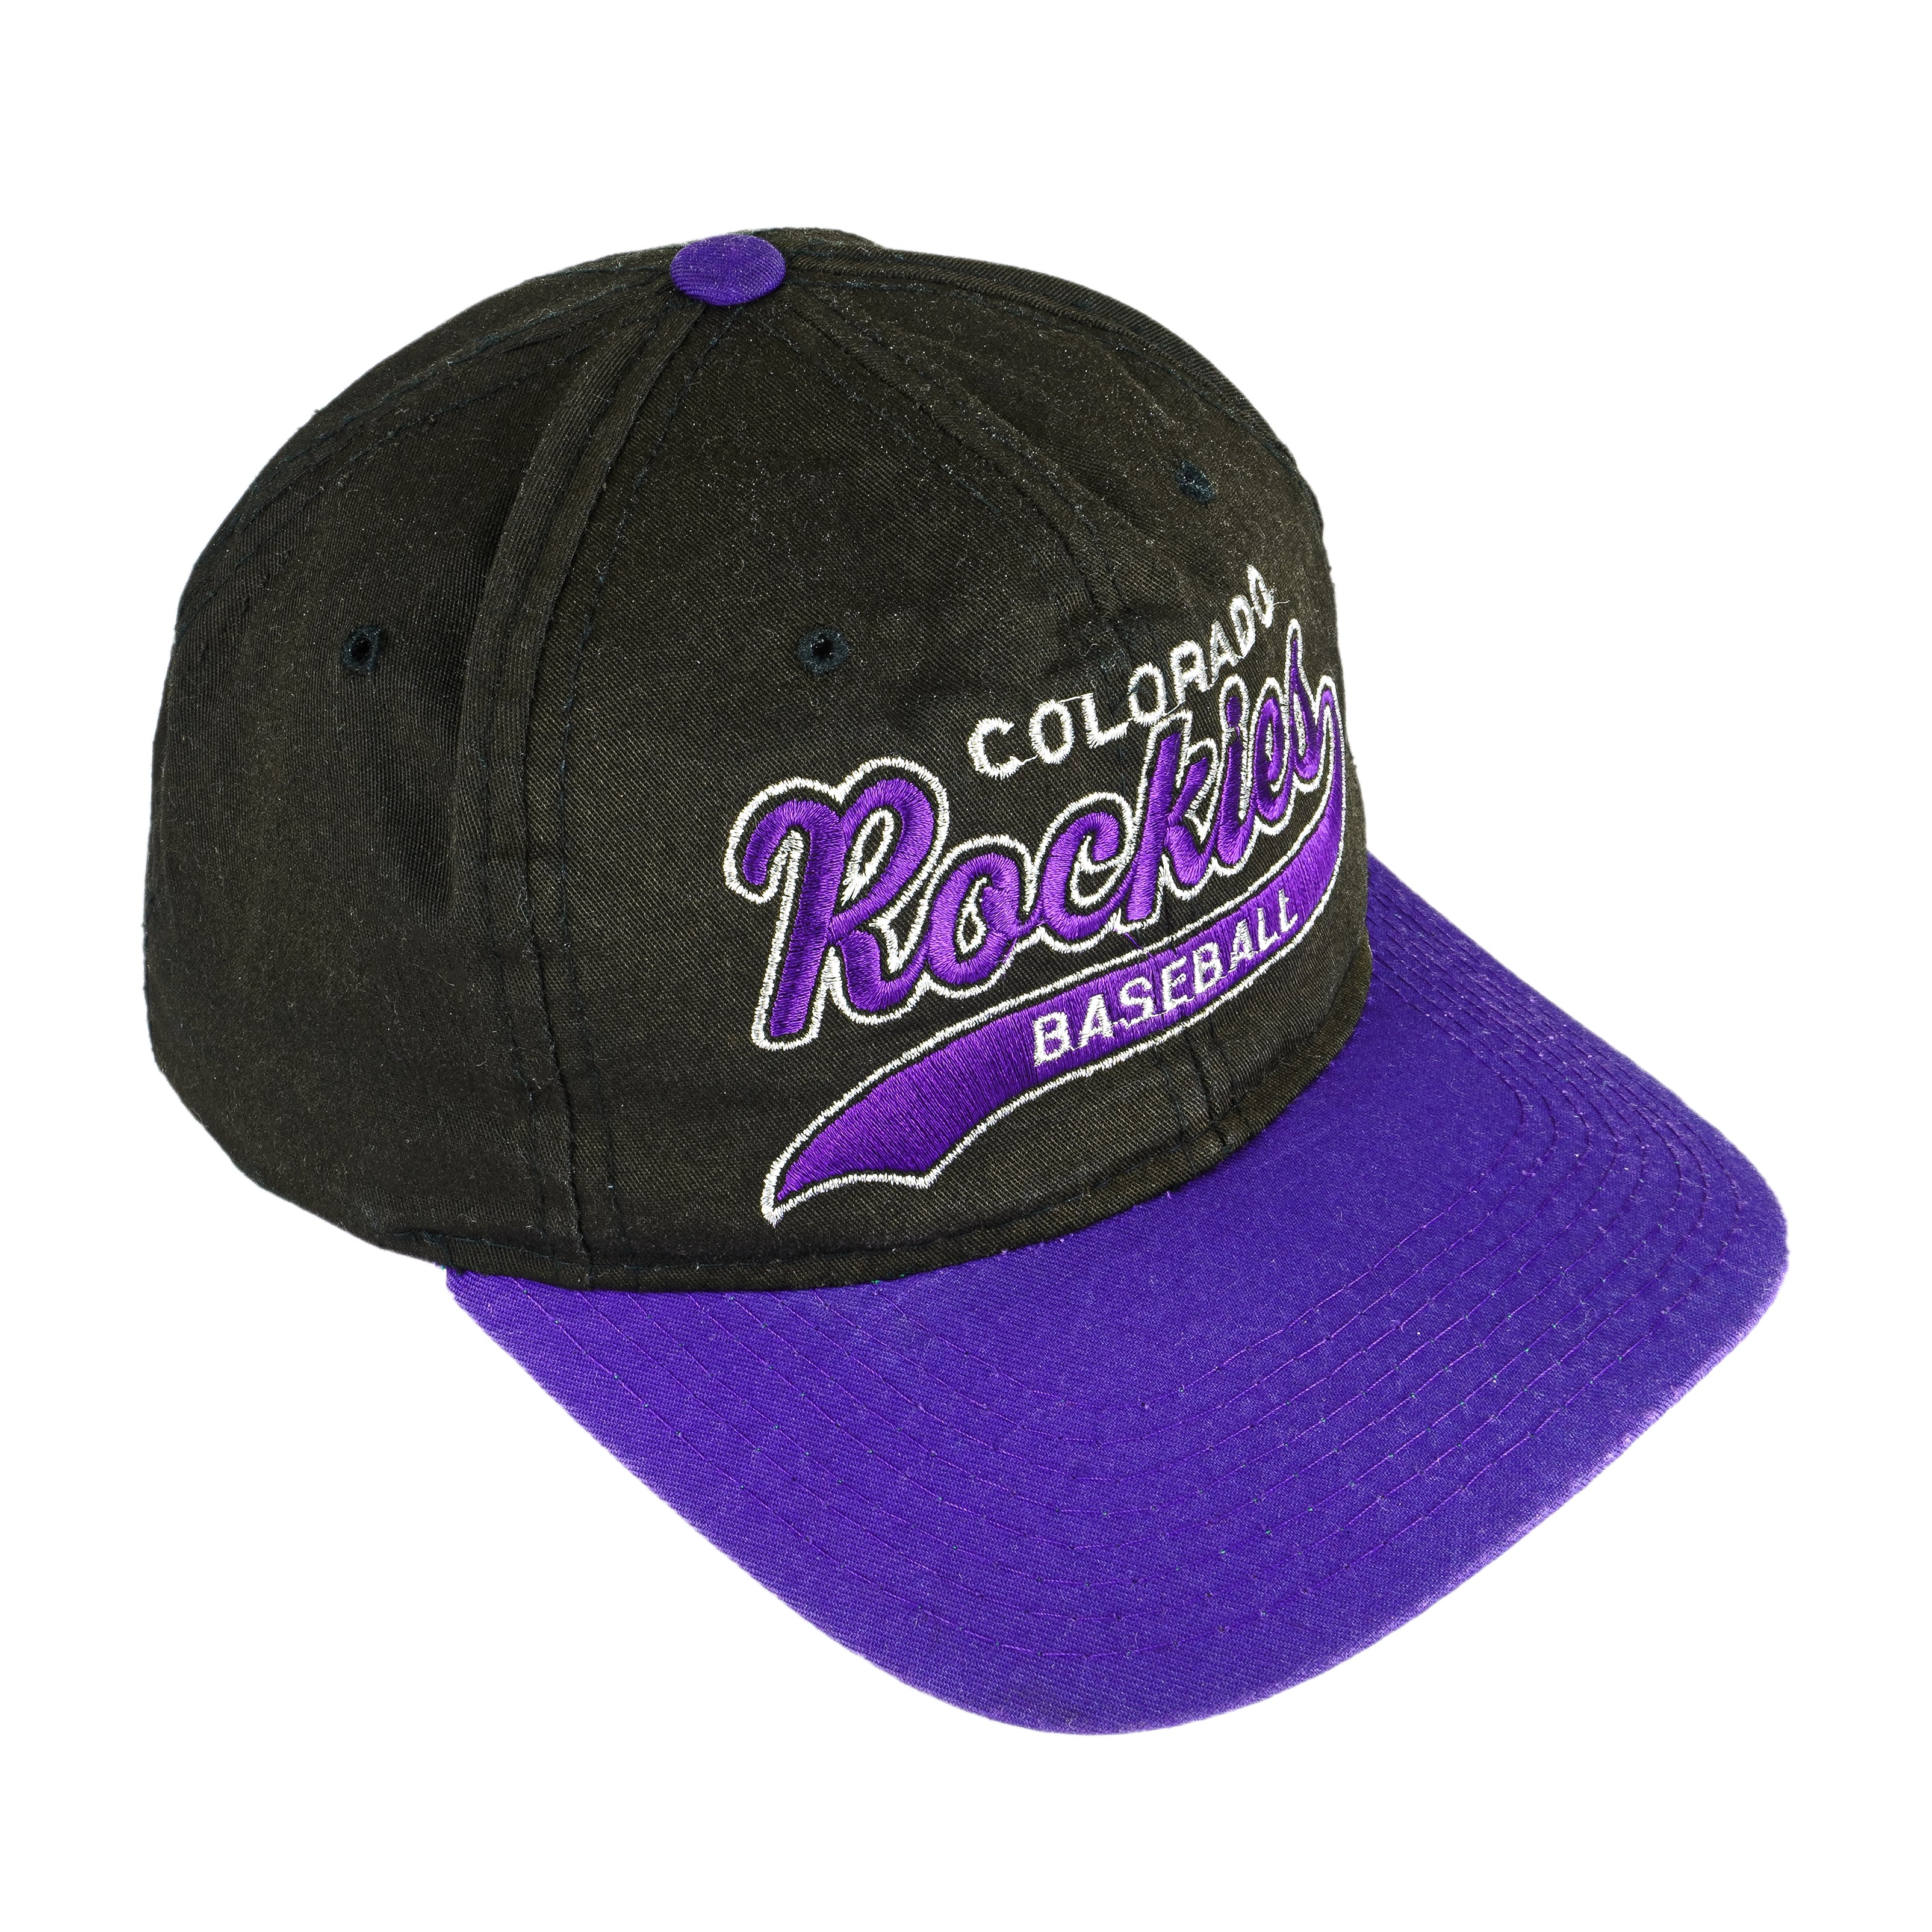 Vintage Starter Paisley Colorado Rockies Snapback Hat MLB